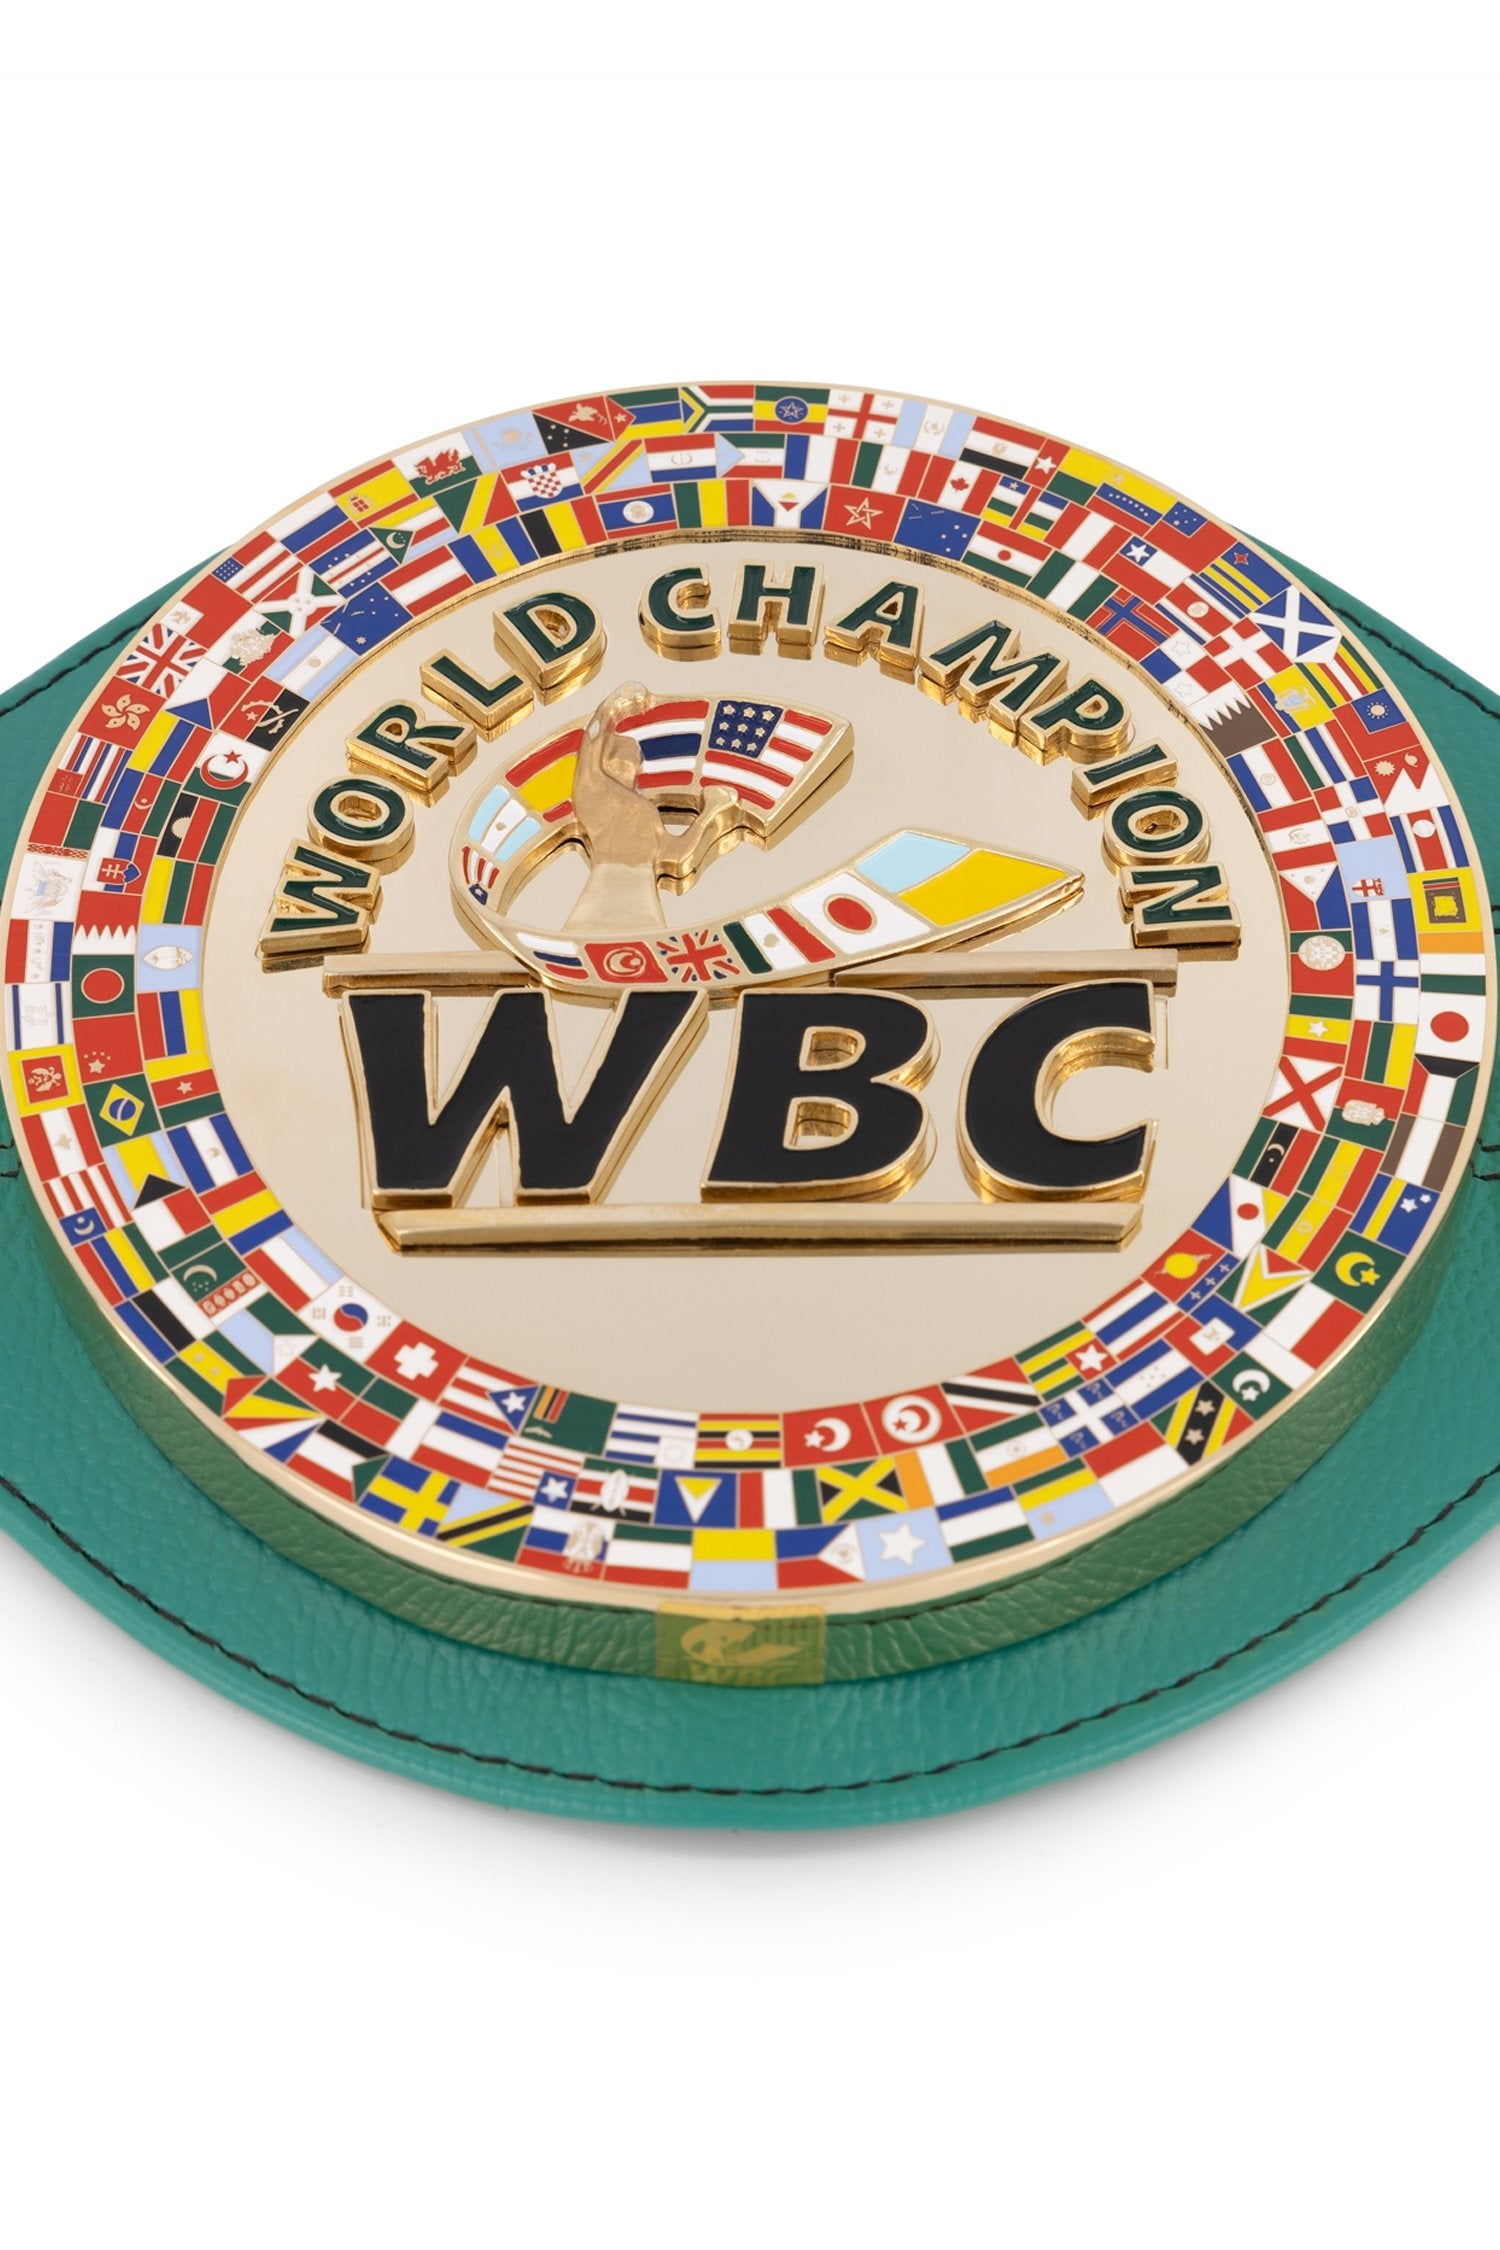 WBC Store WBC - Championship Belt  "Historic Fights" Sugar Ray Leonard vs. Thomas Hearns